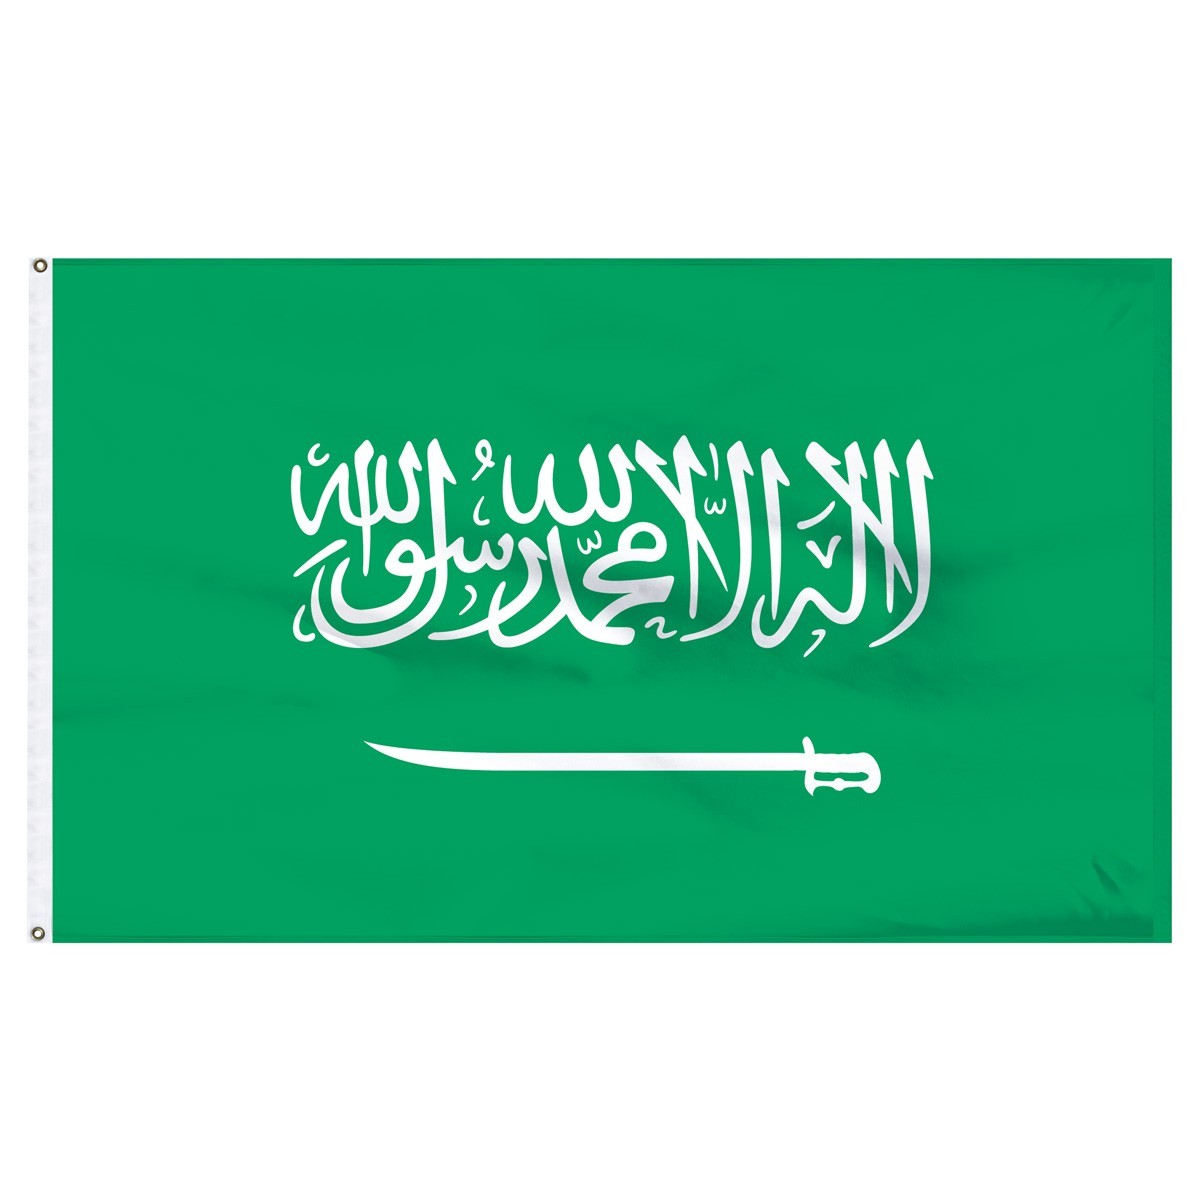 Saudi Arabia 5' x 8' Outdoor Nylon Flag